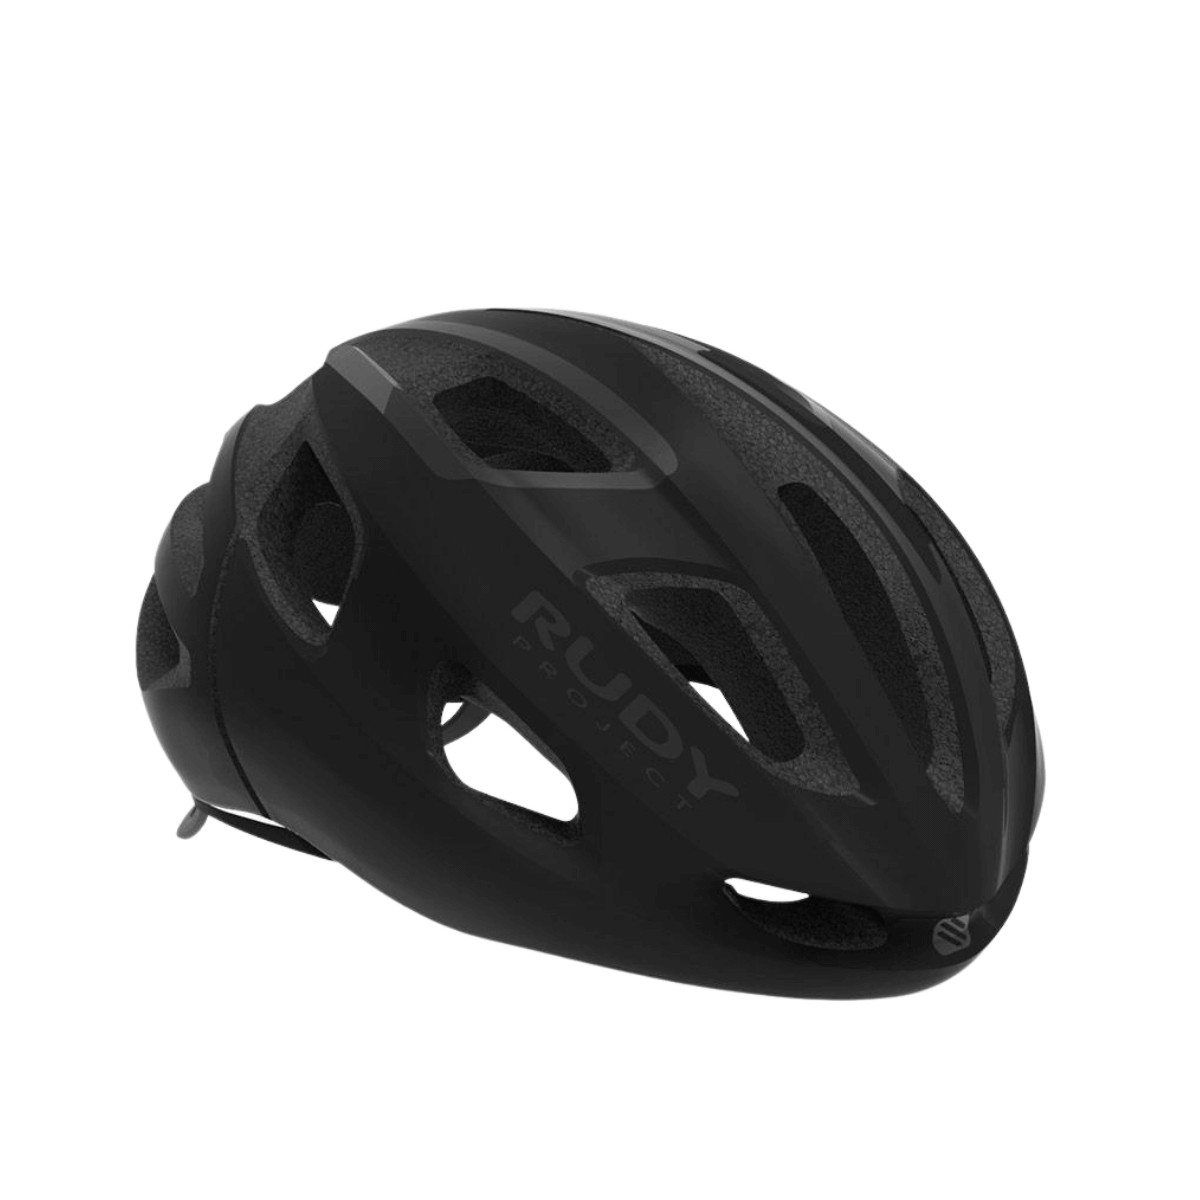 Rudy Project Strym Helmet Matte Black, Taille S/M (54-58 cm)